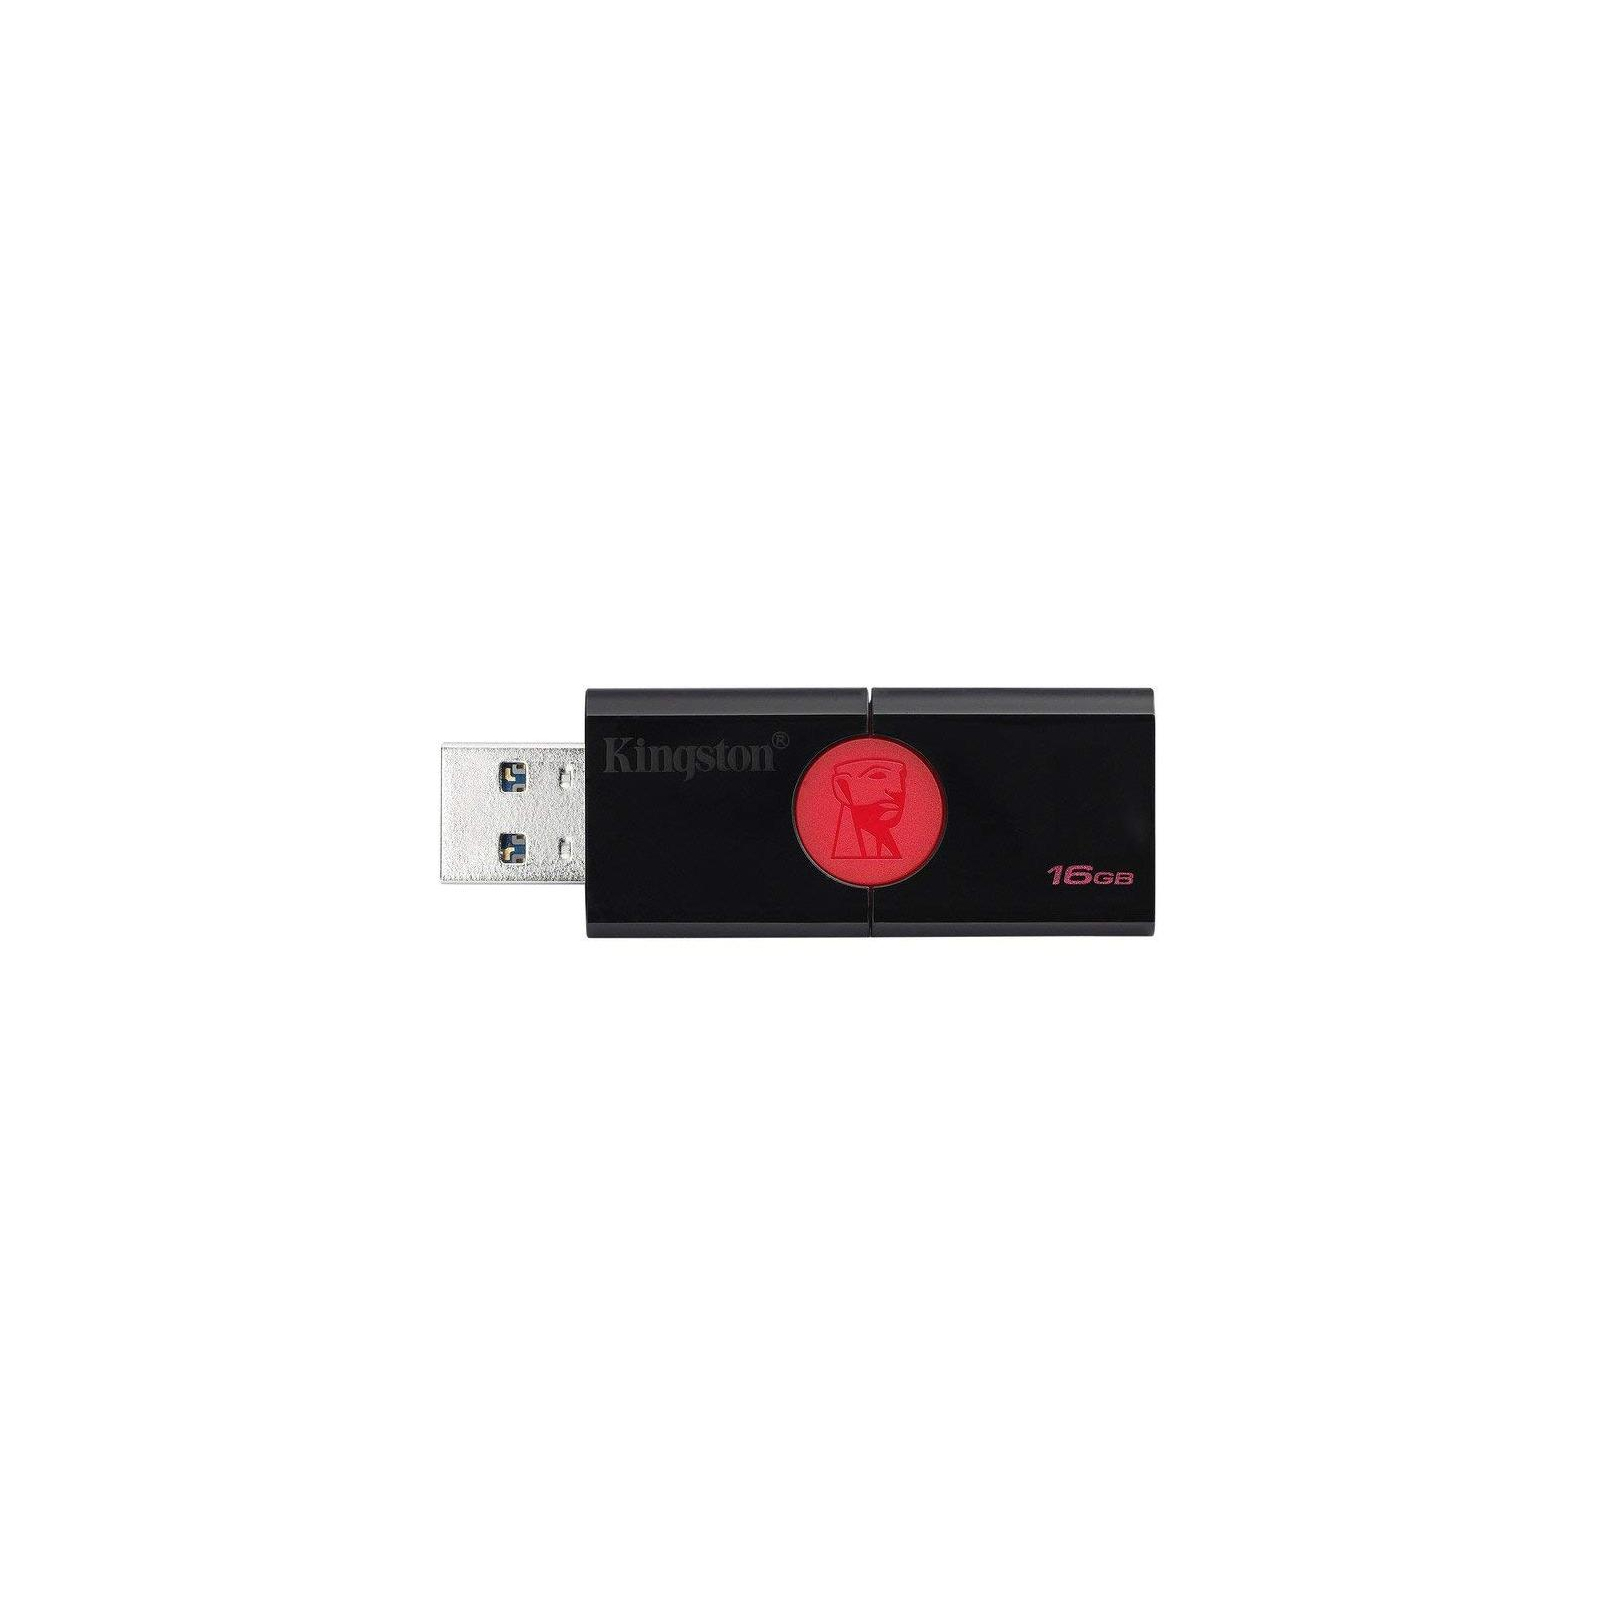 USB флеш накопитель Kingston 16GB DT106 USB 3.0 (DT106/16GB) изображение 3